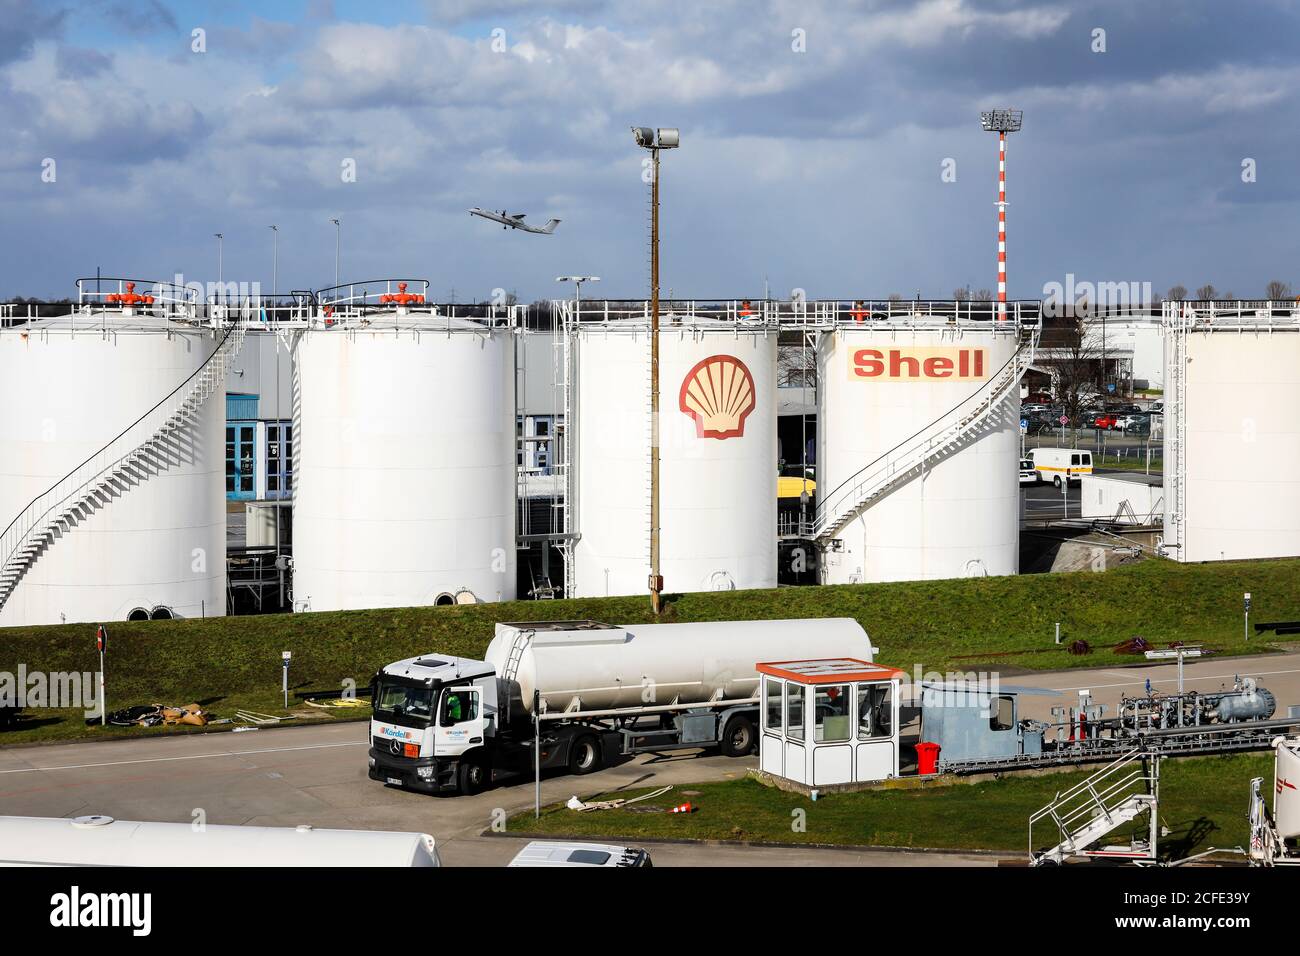 Shell, aviation fuel tank farm at Düsseldorf Airport, Duesseldorf, North Rhine-Westphalia, Germany Stock Photo